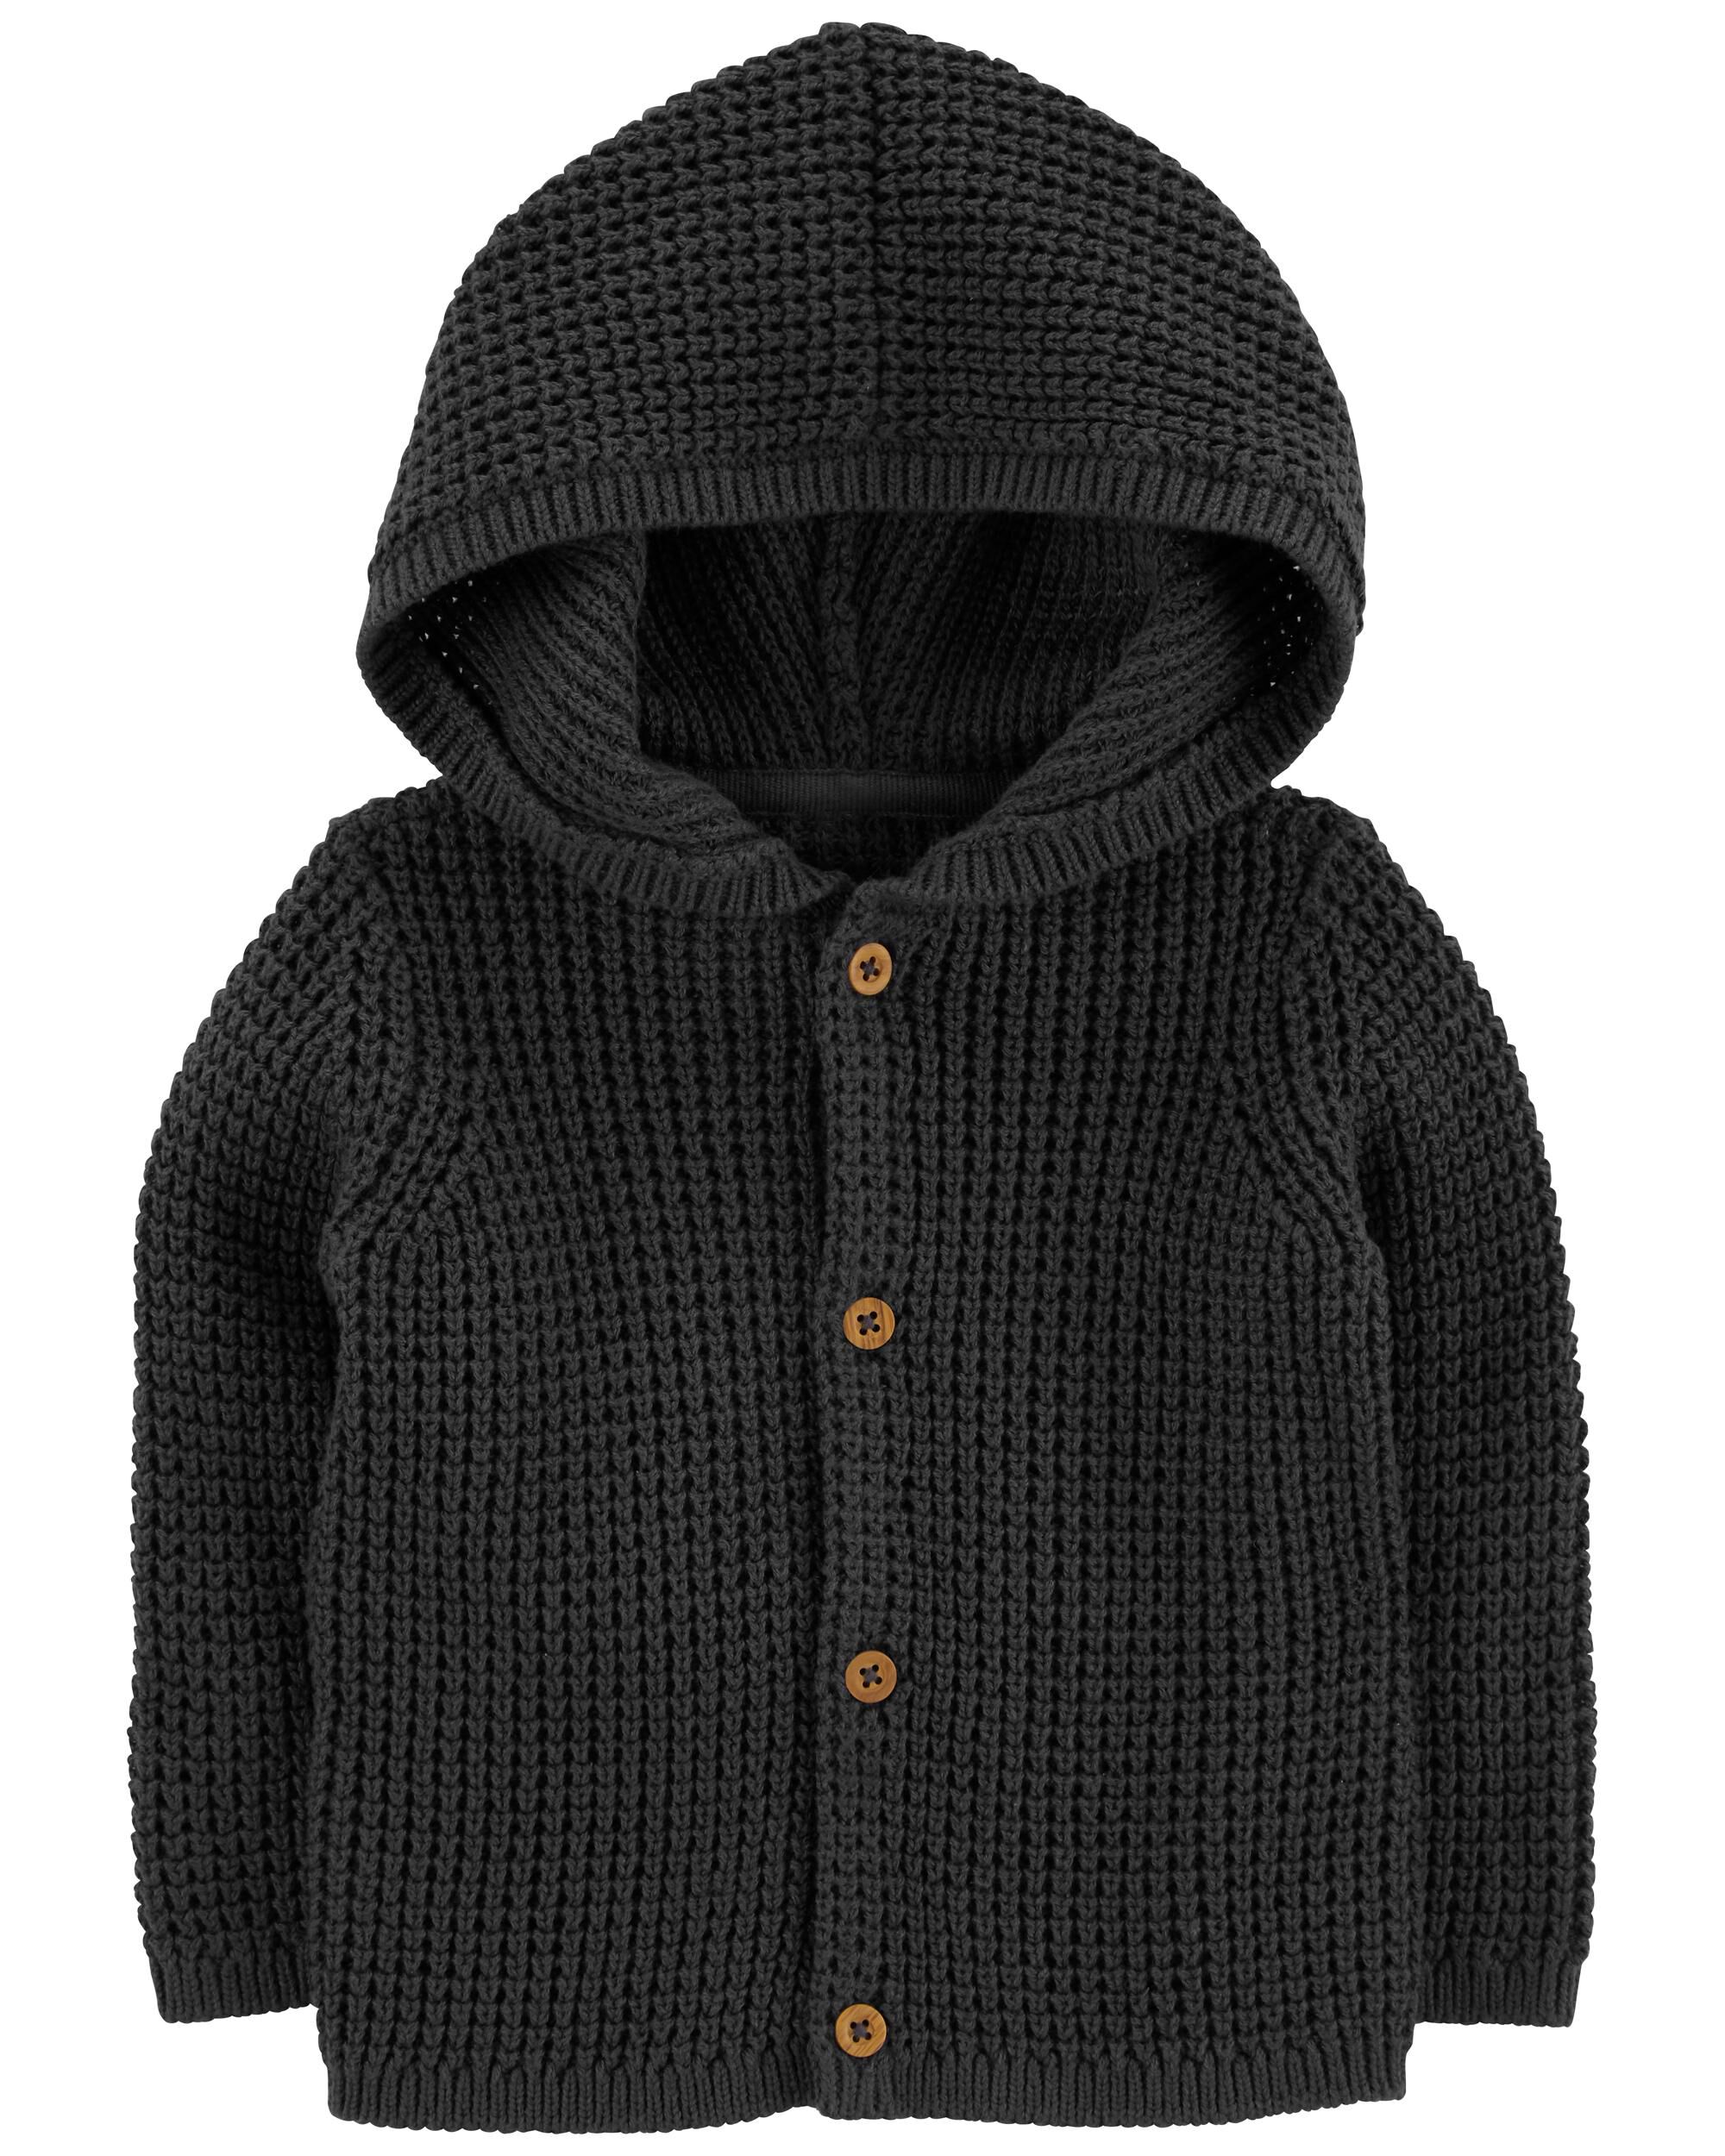 Details about   EUC Carter's Infant Boys 12 Months Brown Sherpa Fleece Sweater Zip Front 